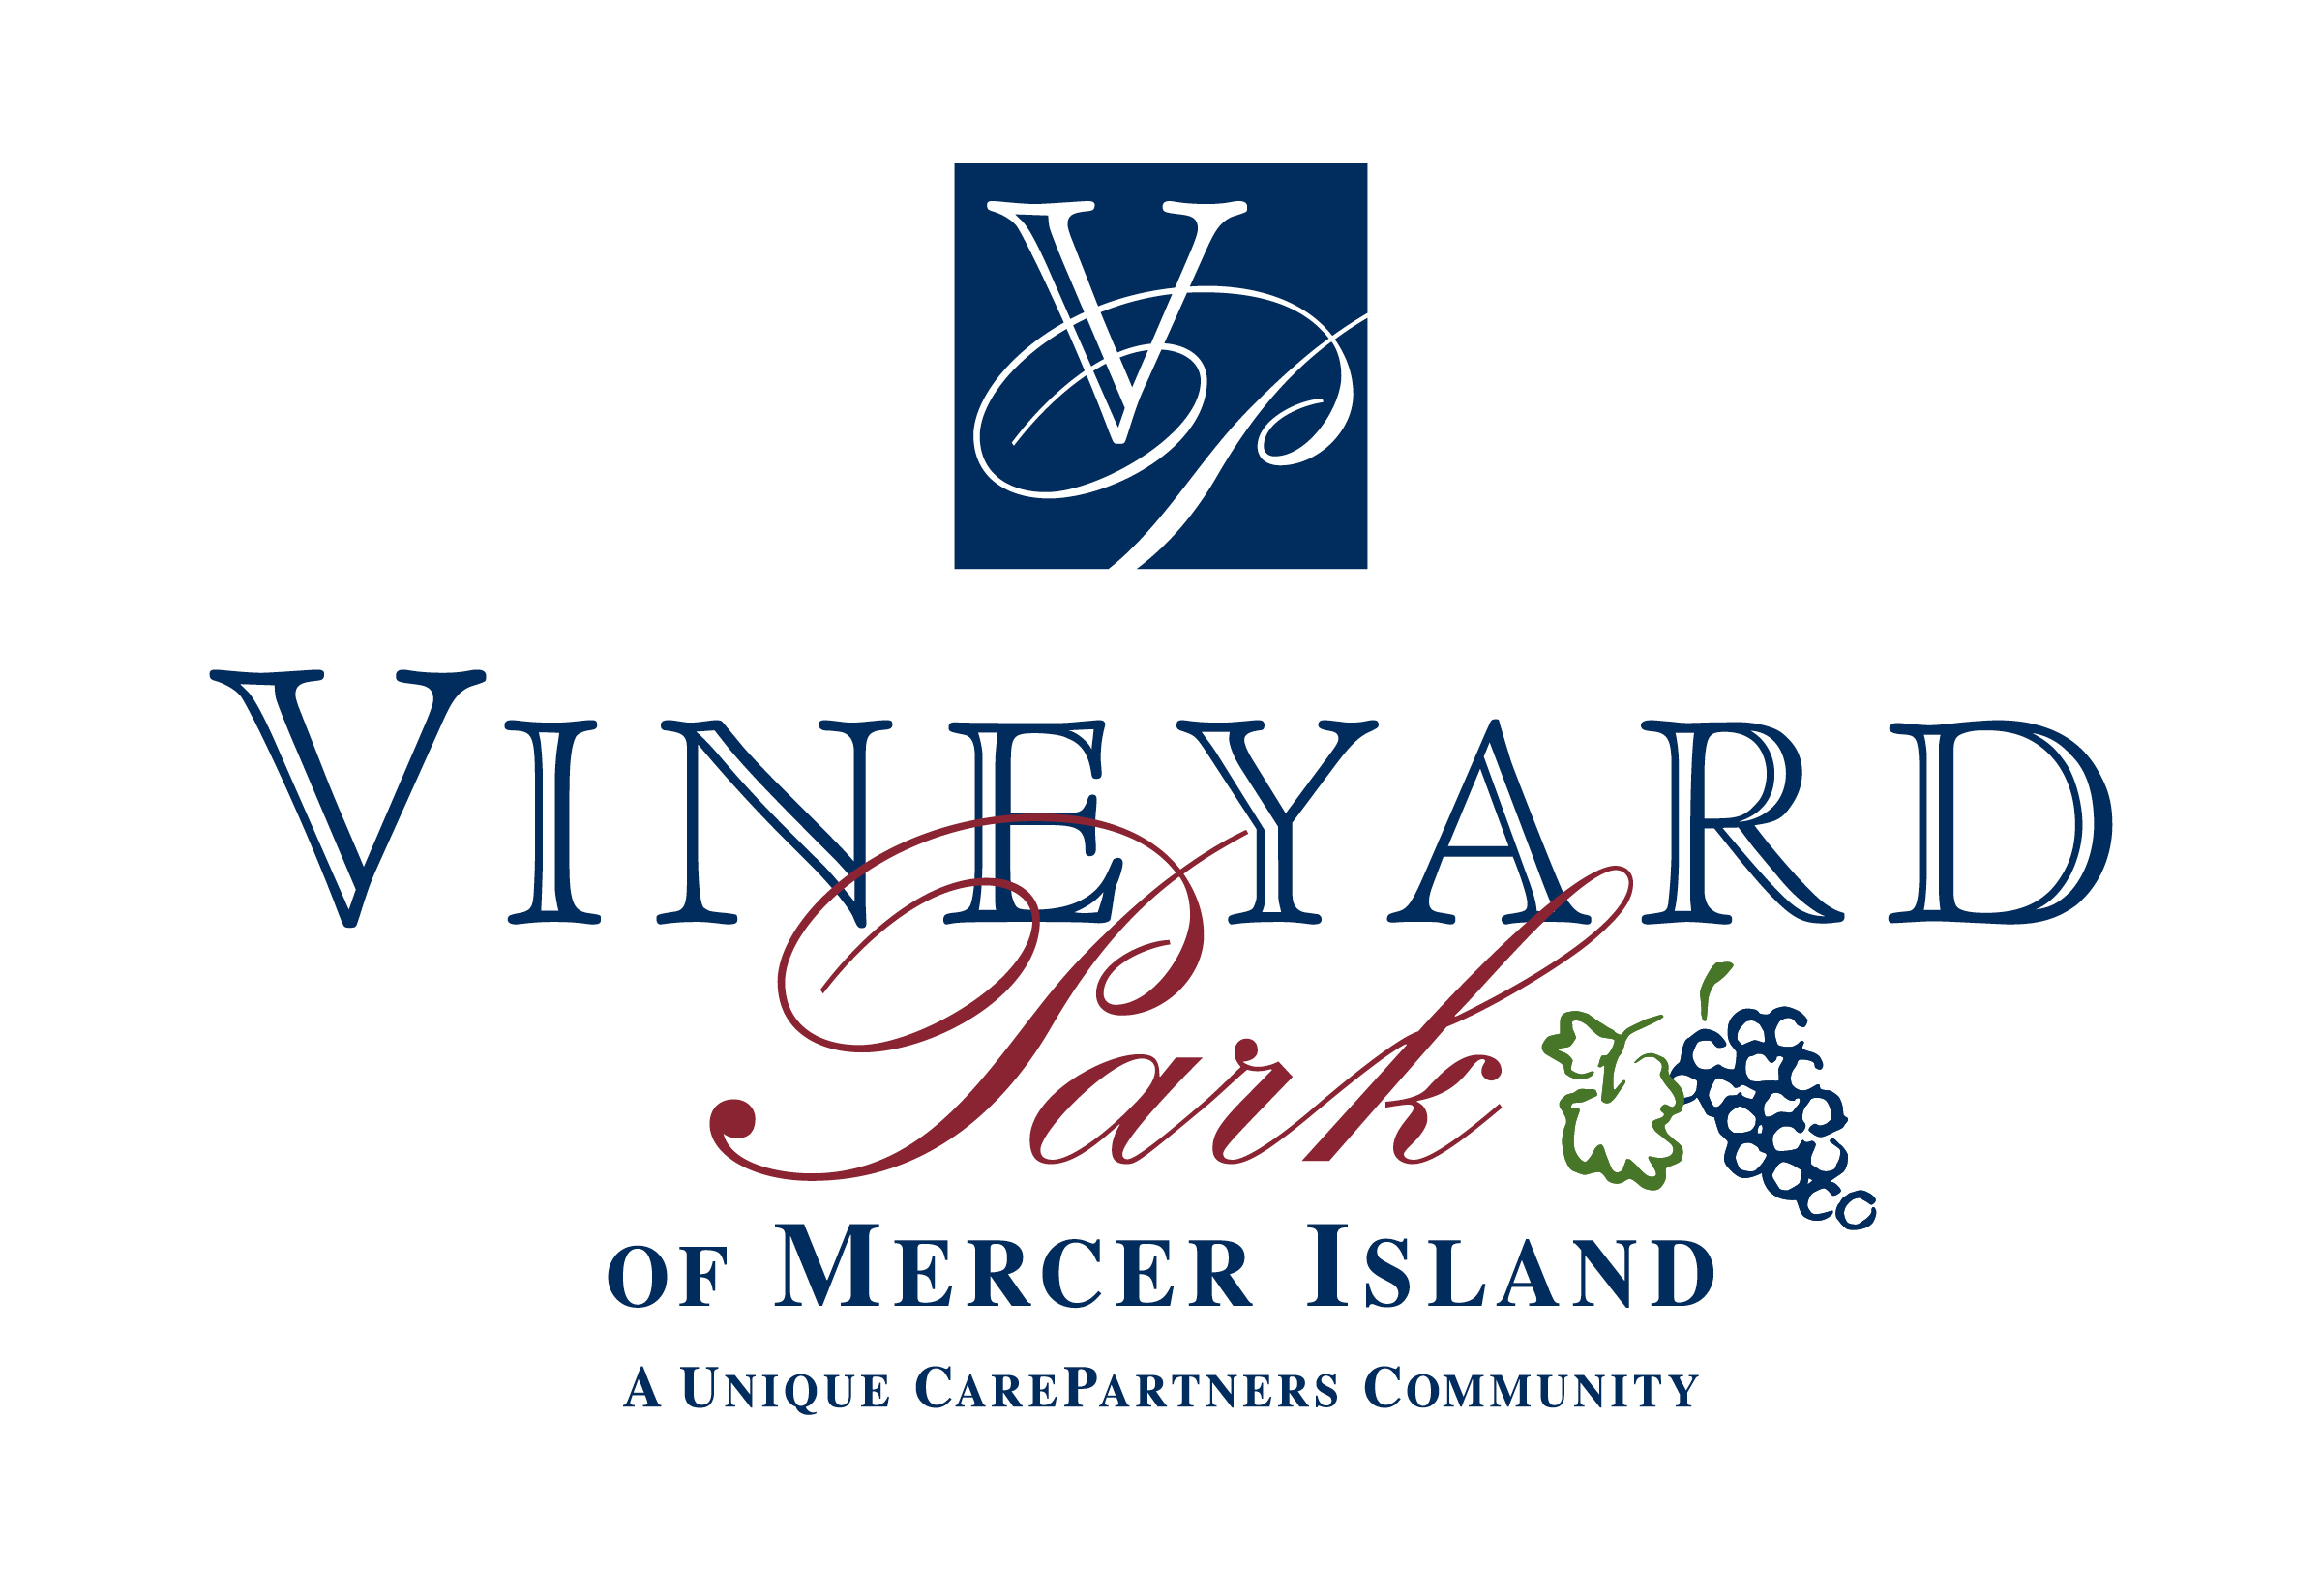 Vineyard Park of Mercer Island